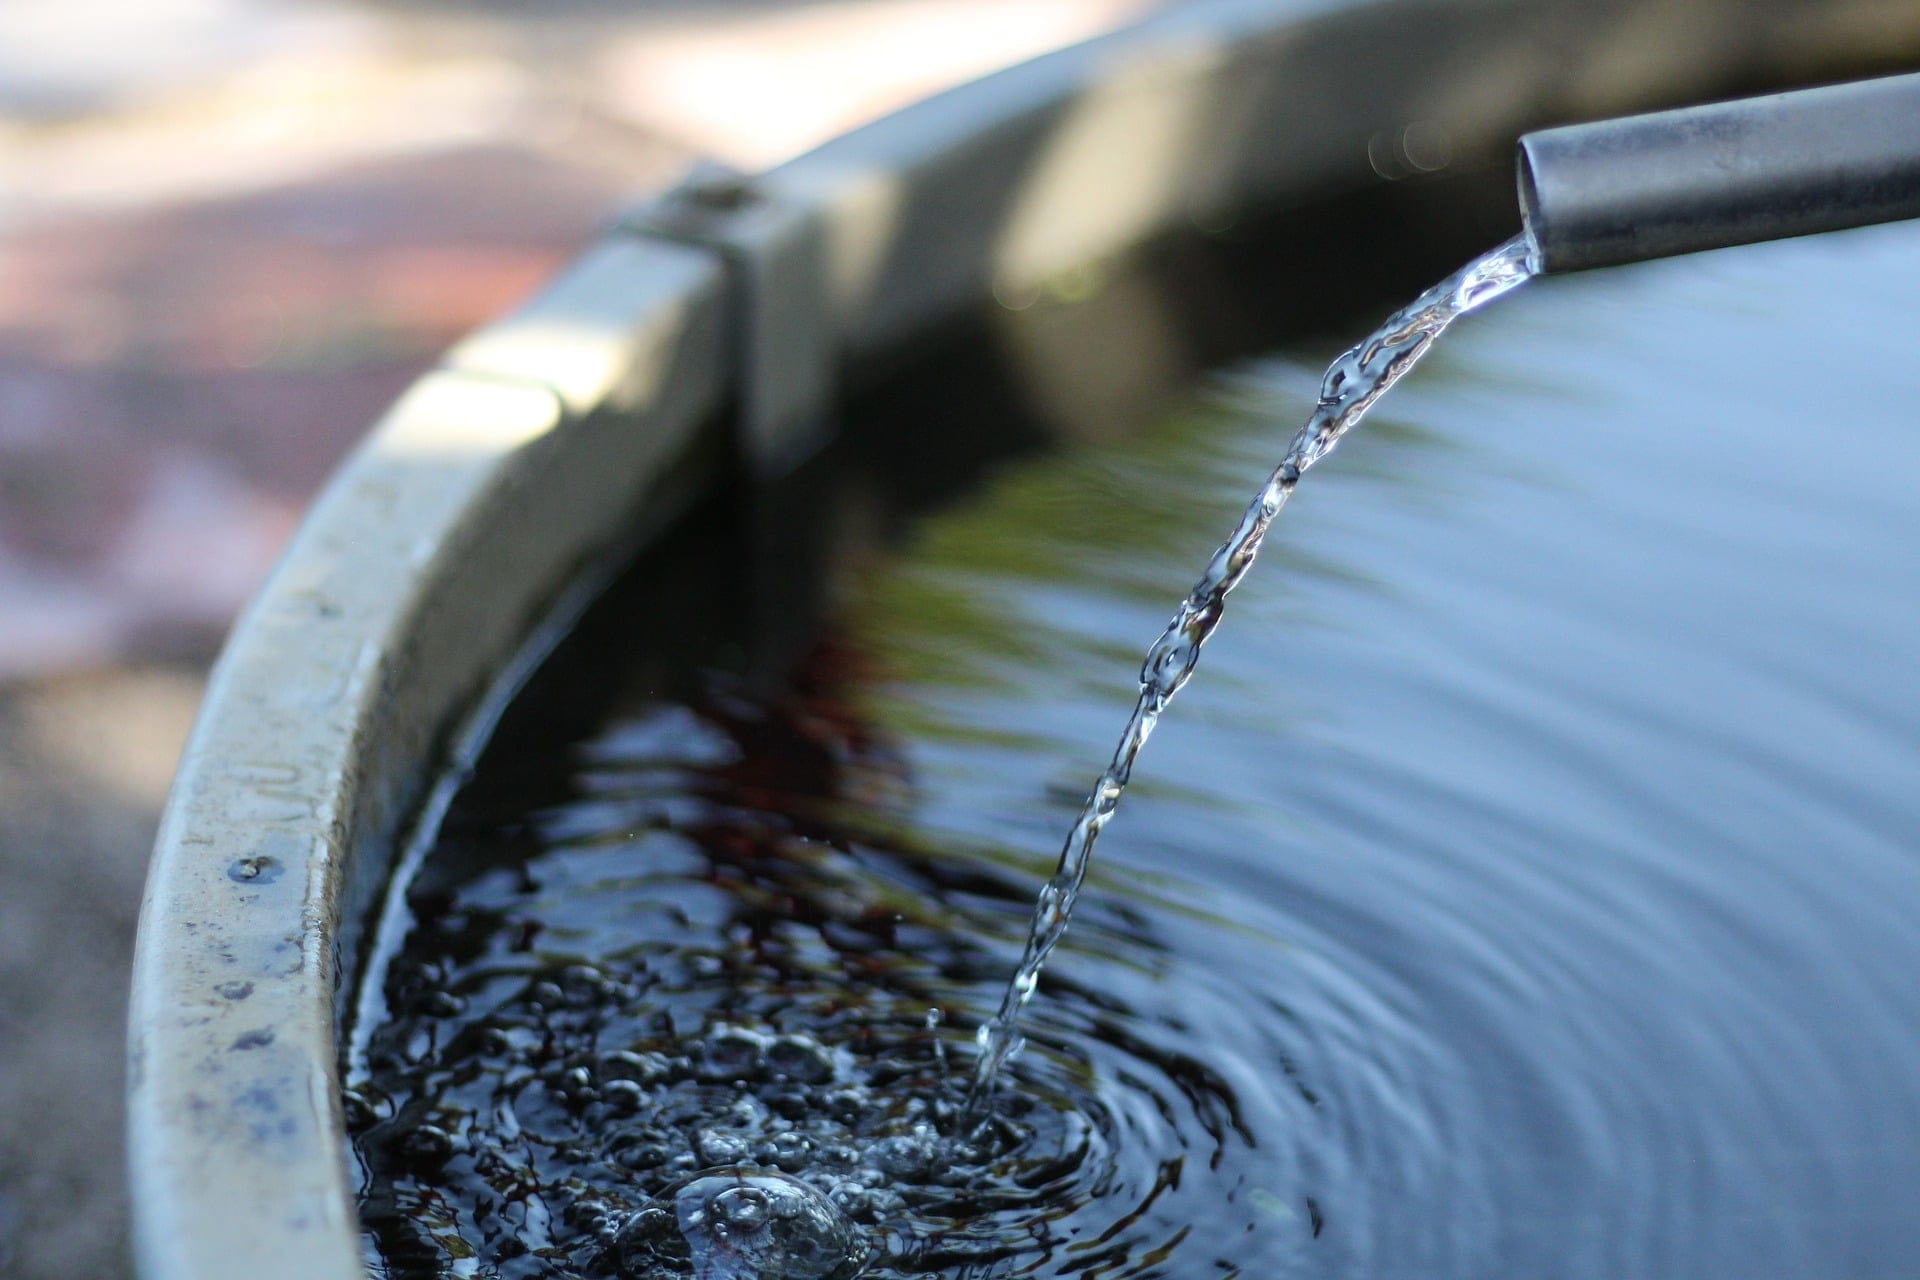 Camp Lejeune Water Contamination Lawsuit